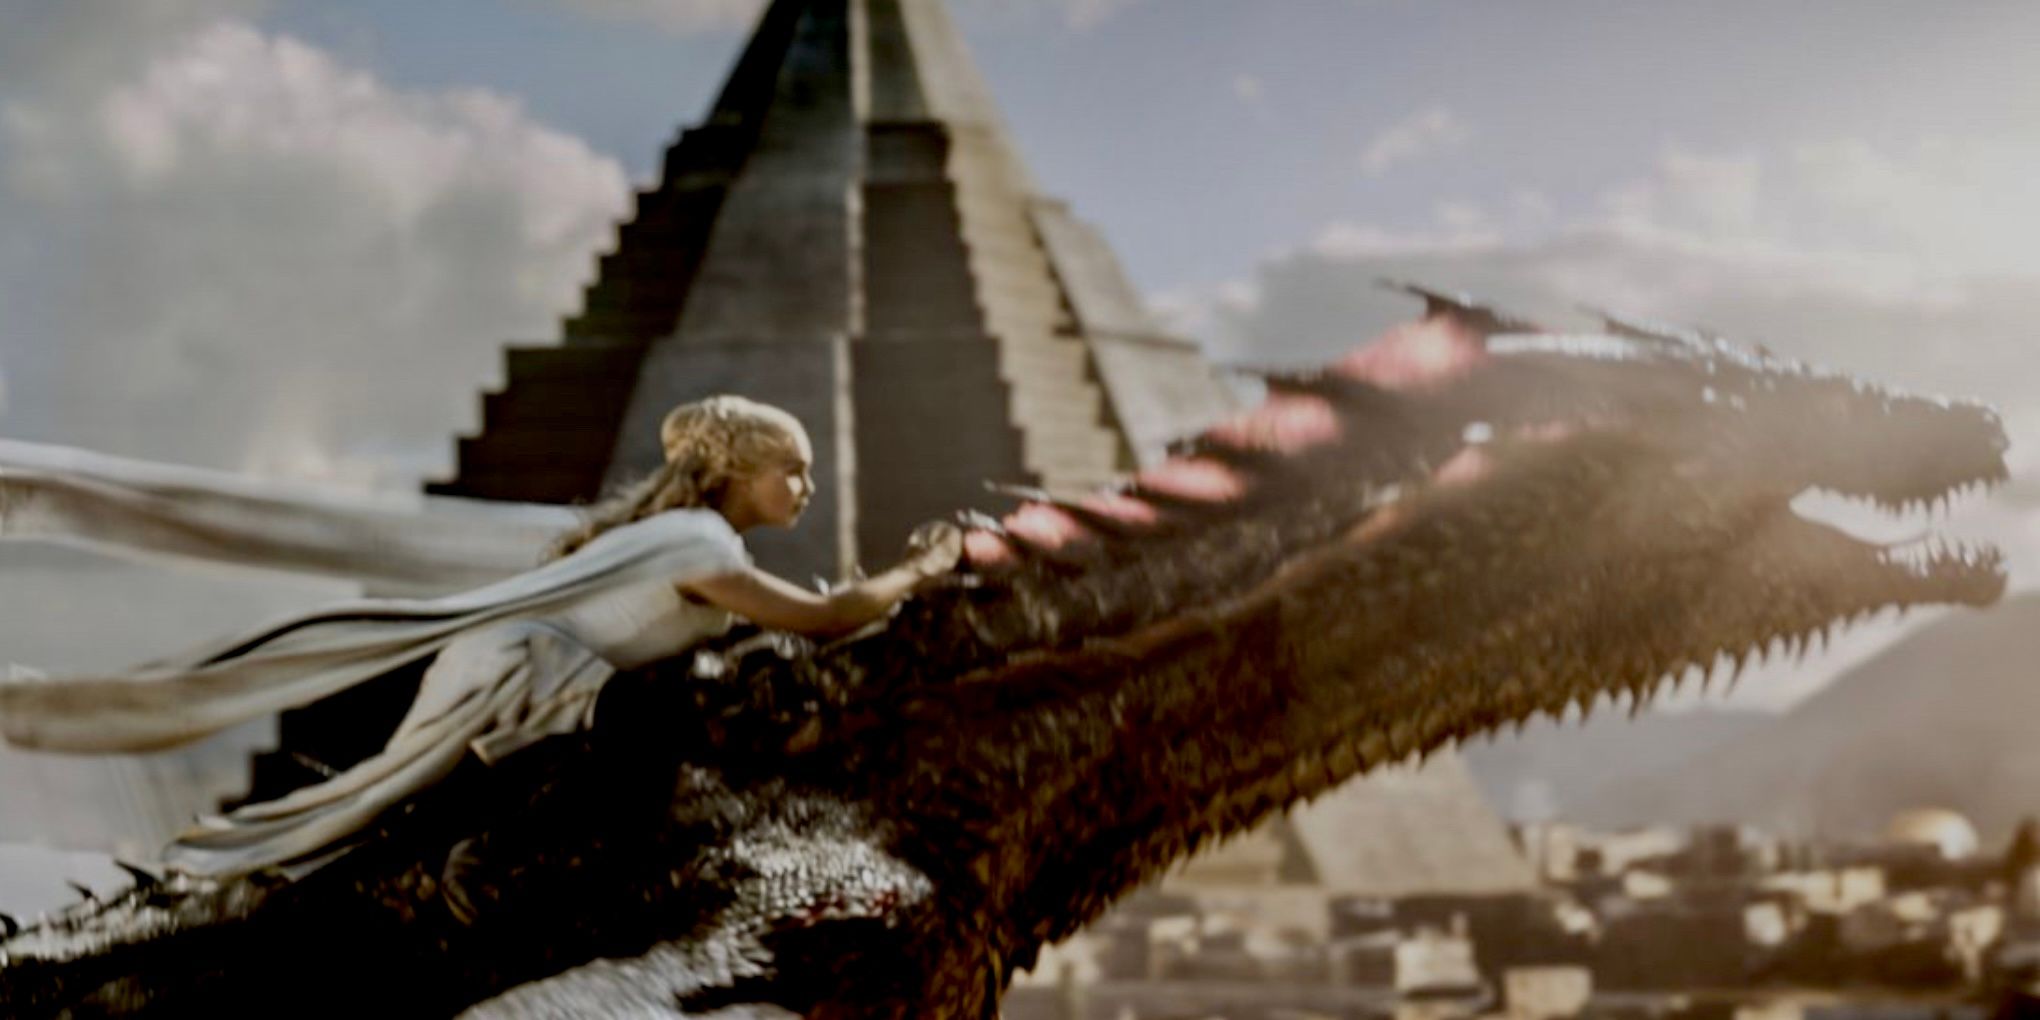 Daenerys Targaryen (Emilia Clarke) riding Drogon in the Game of Thrones episode The Dance Of Dragons (S5E9)